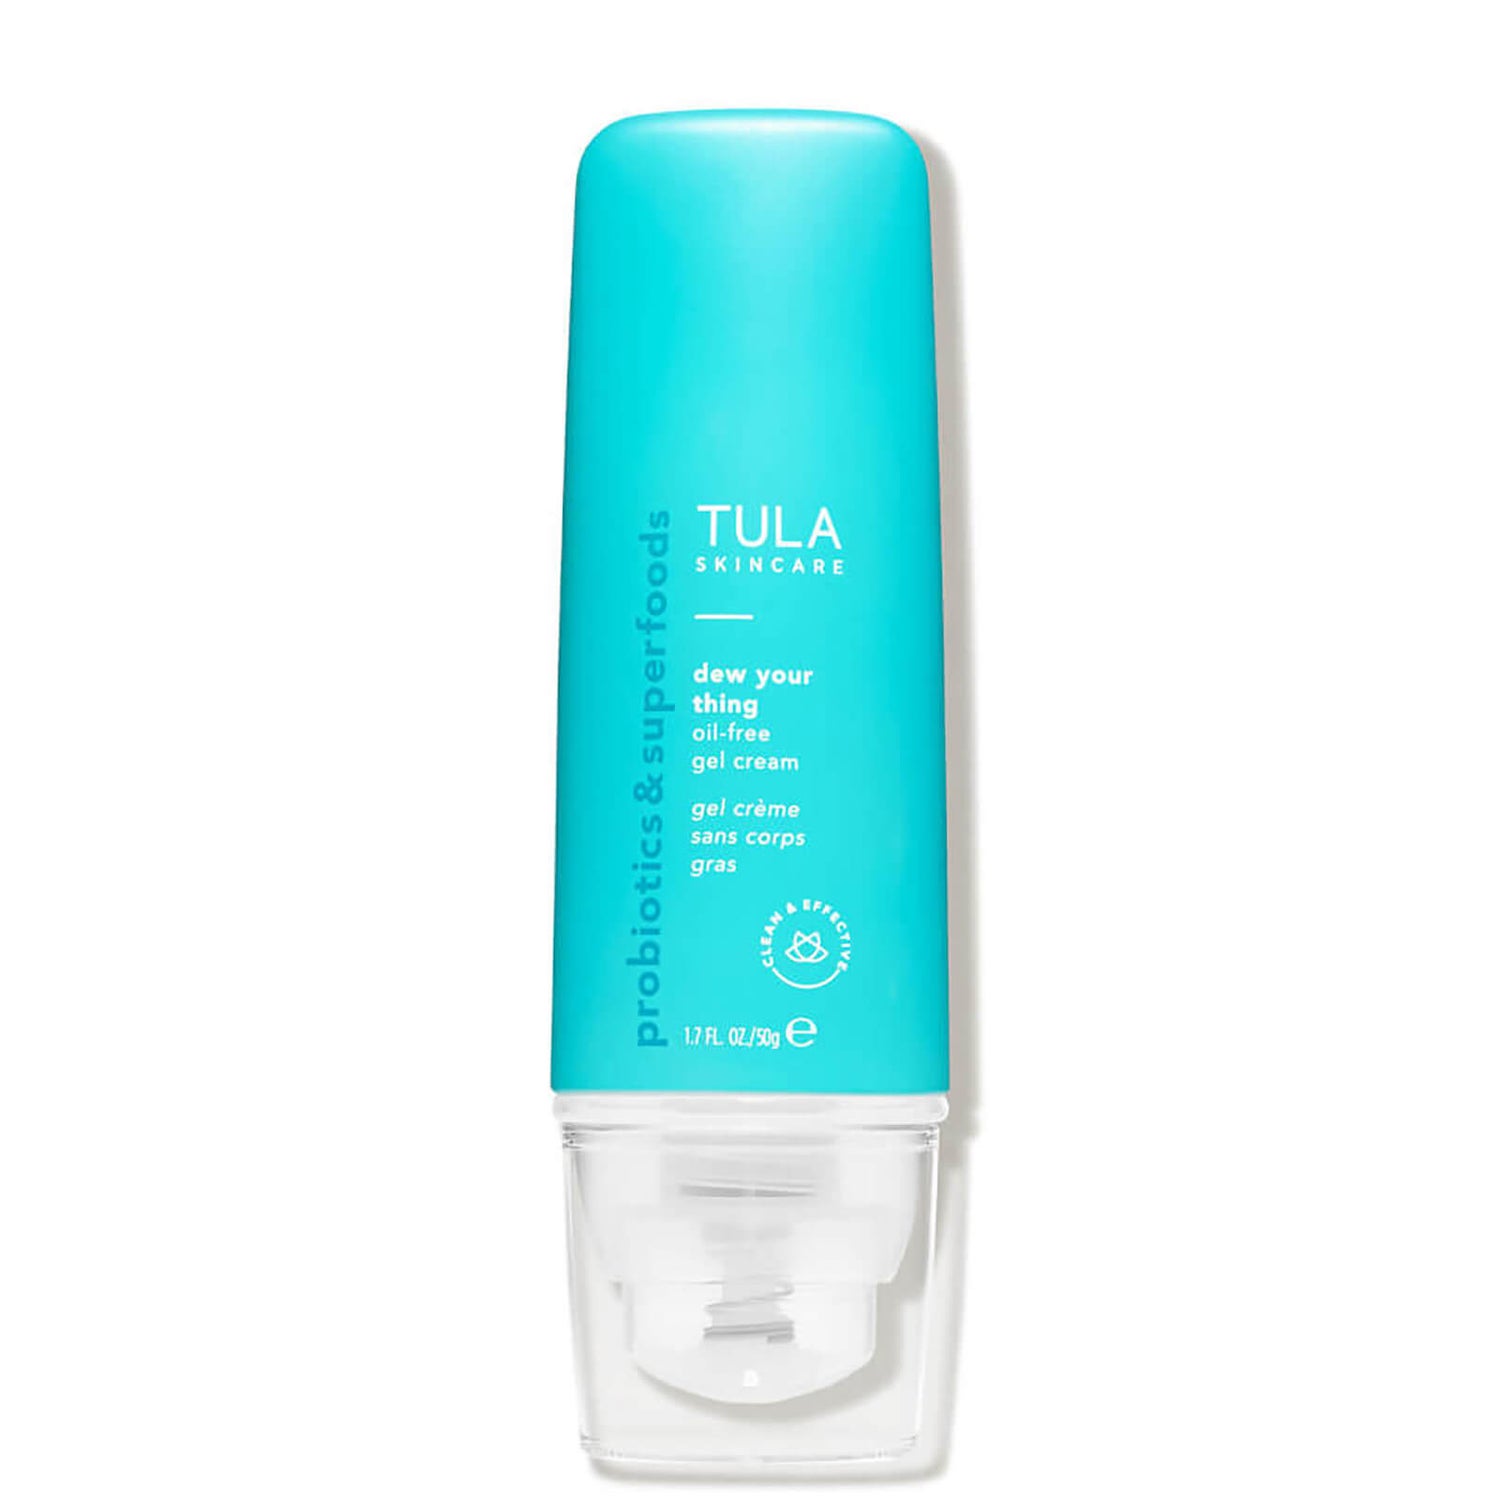 TULA Skincare Dew Your Thing Oil-Free Gel Cream (1.7 fl. oz.)